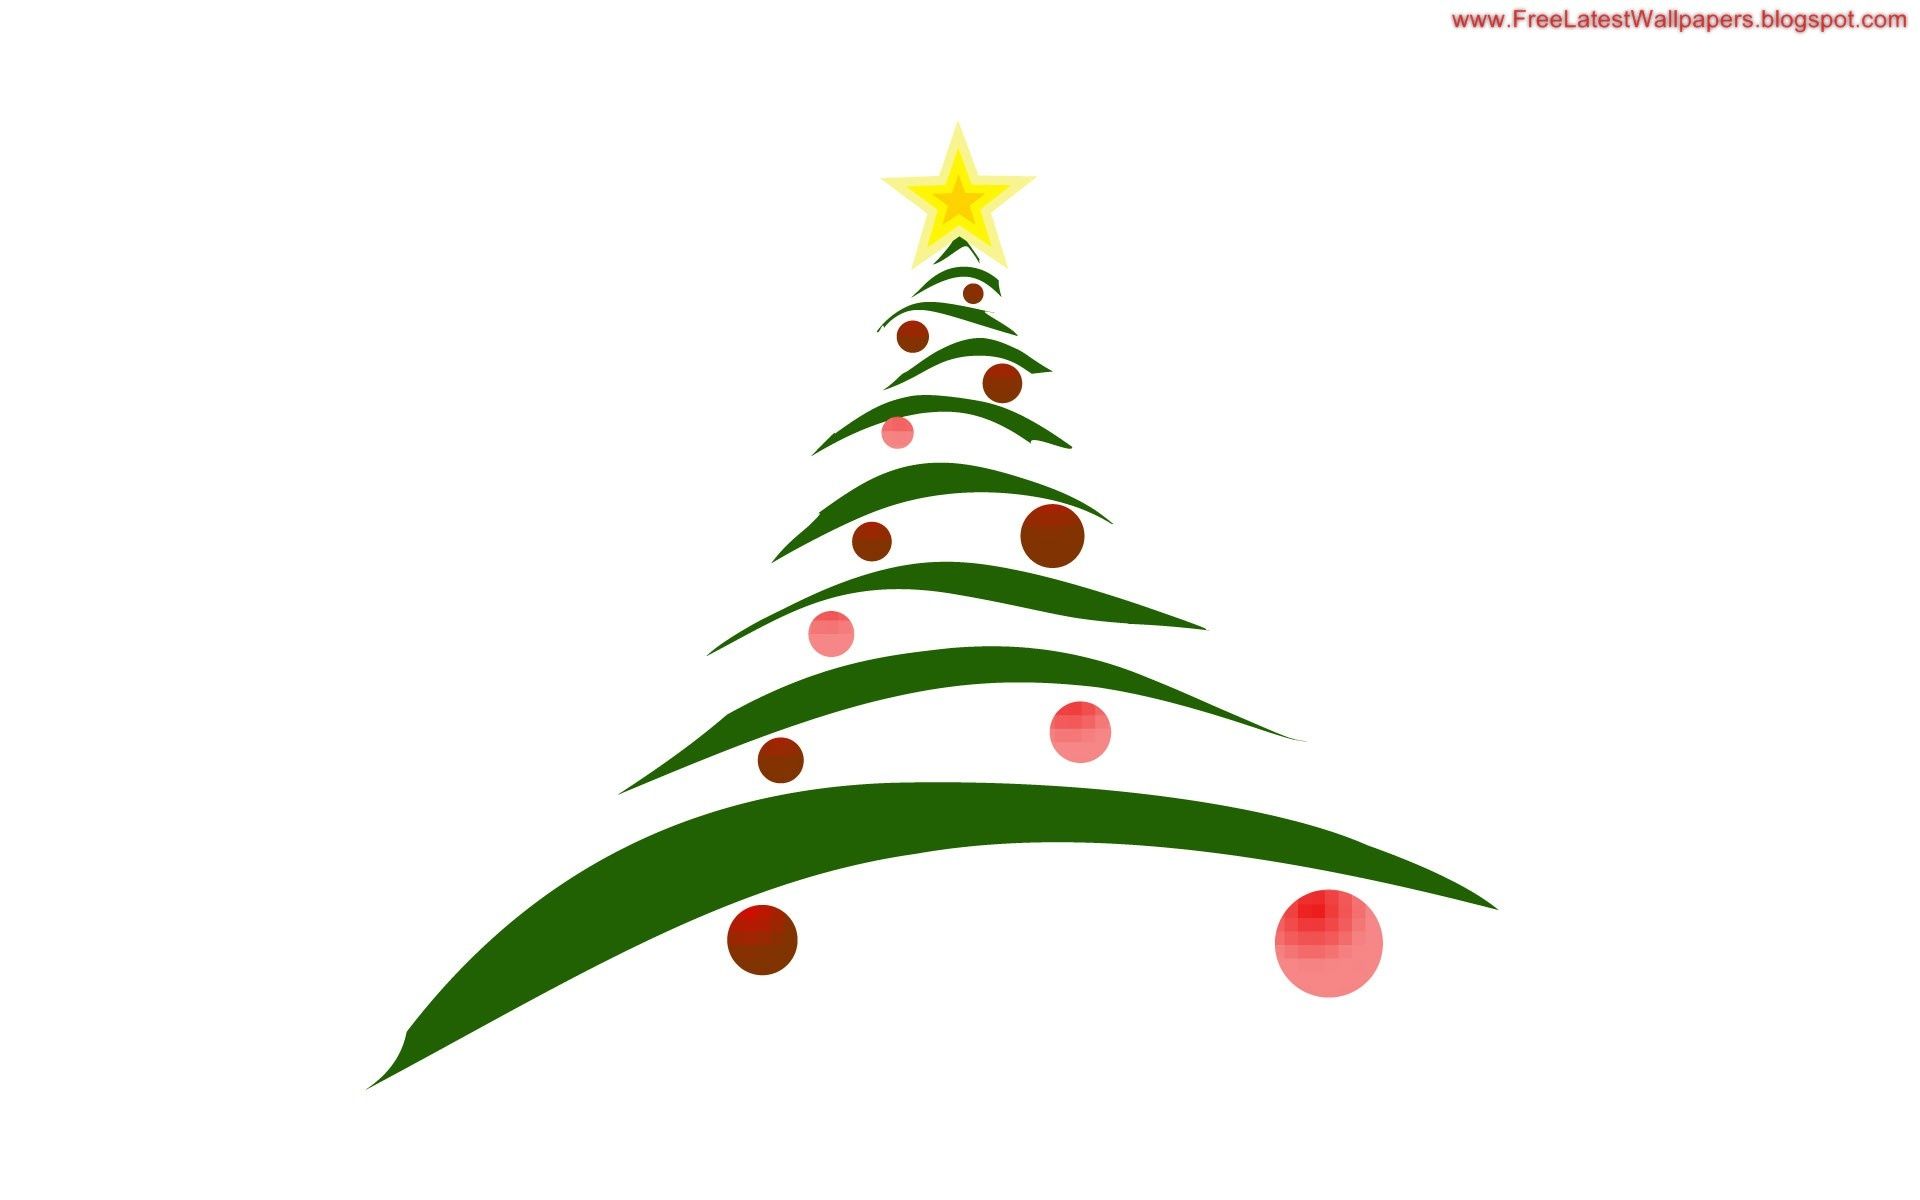 Christmas tree. Christmas tree wallpaper, Christmas screen savers, Ceramic christmas trees